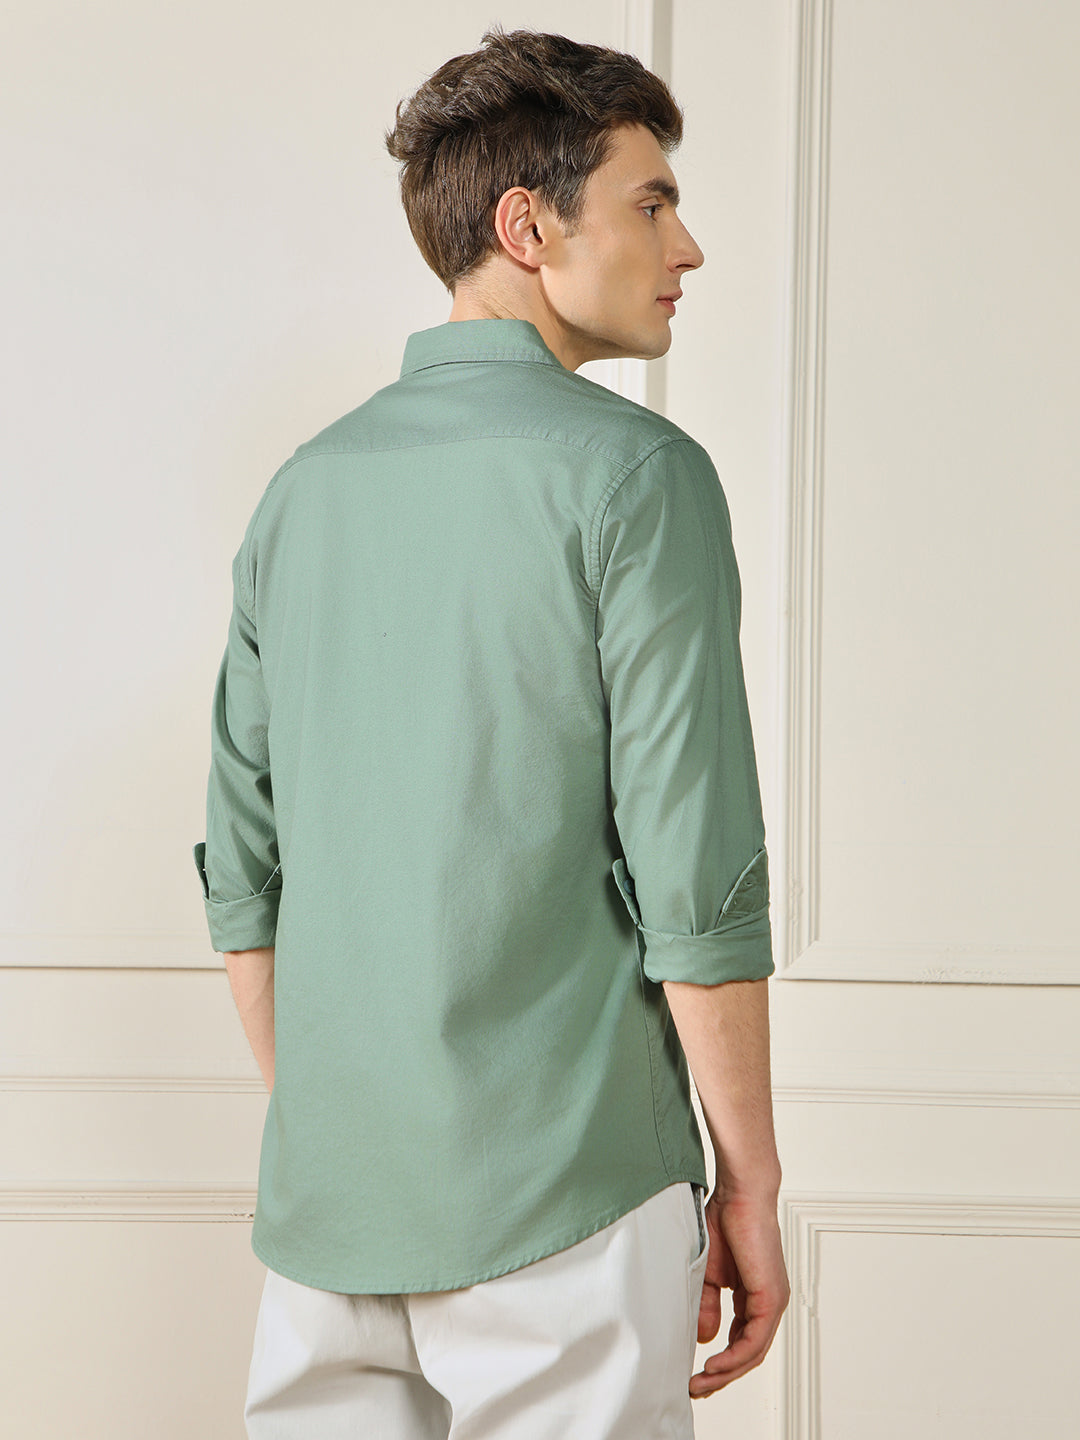 Dennis Lingo Men's Green Solid Spread Collar Cotton Shirt